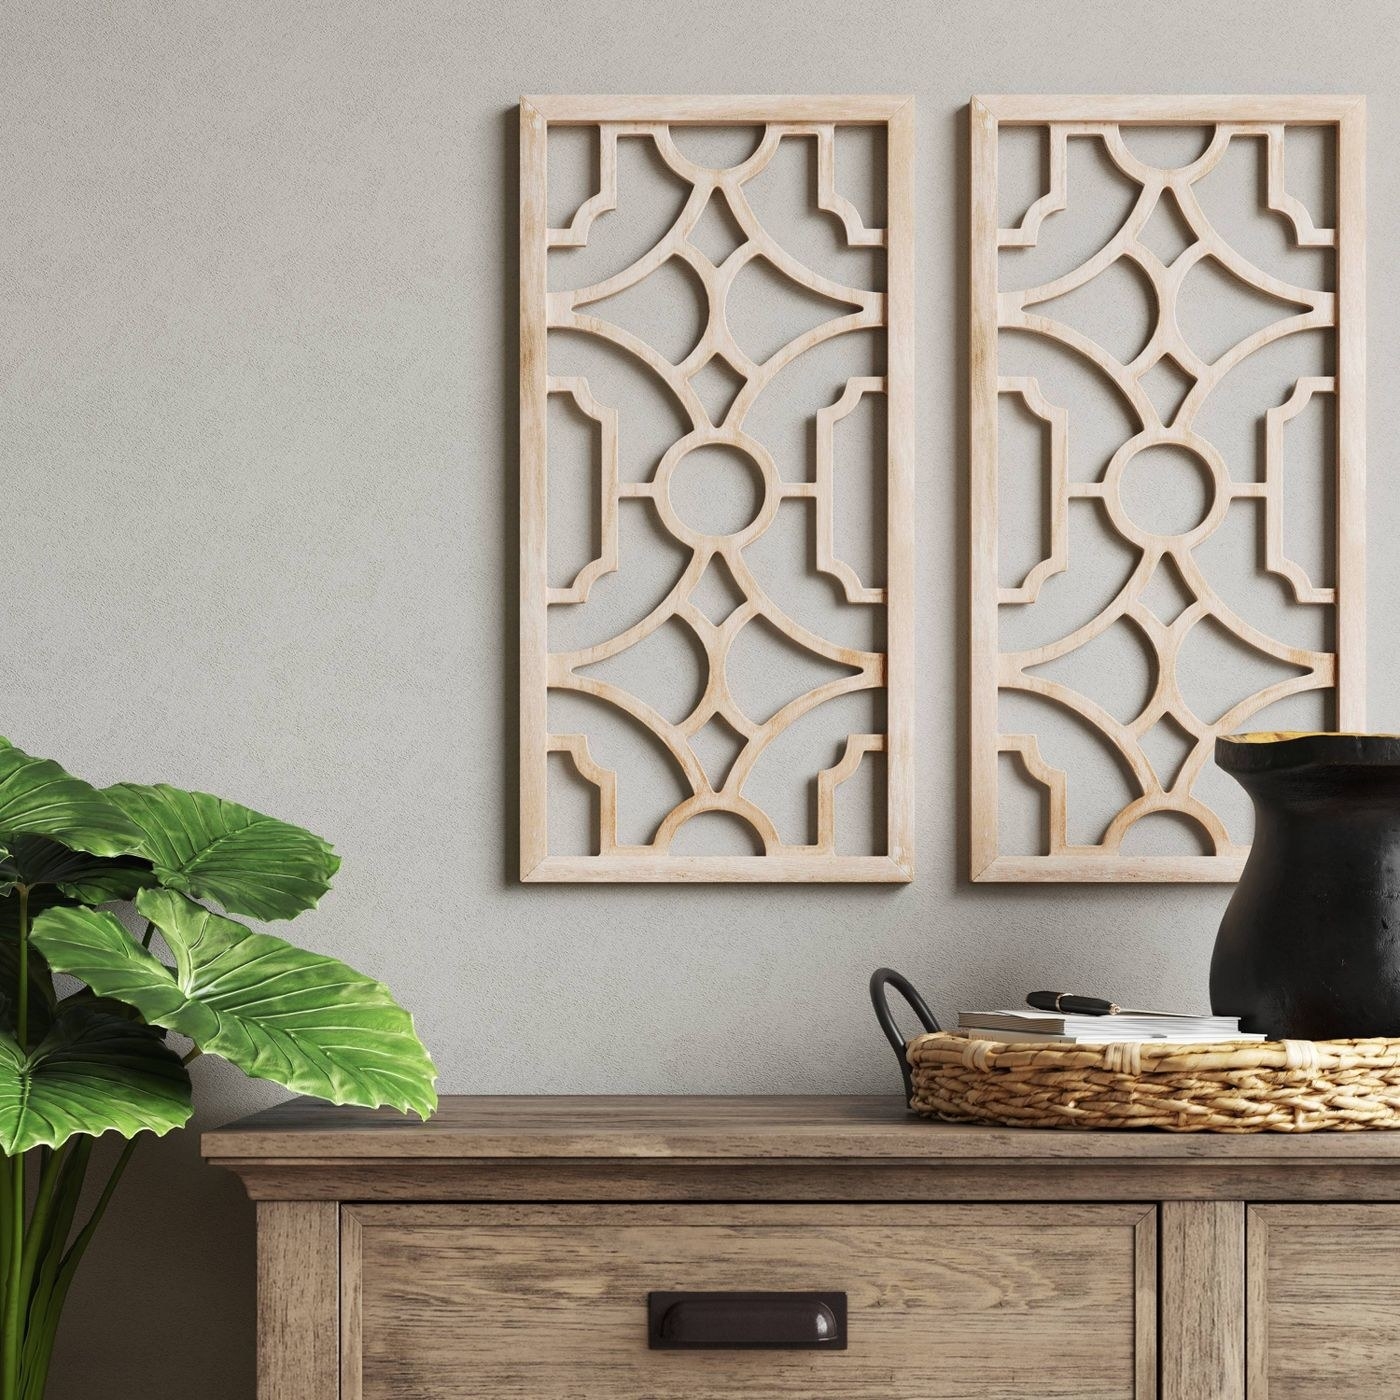 A lattice wood piece on a wall